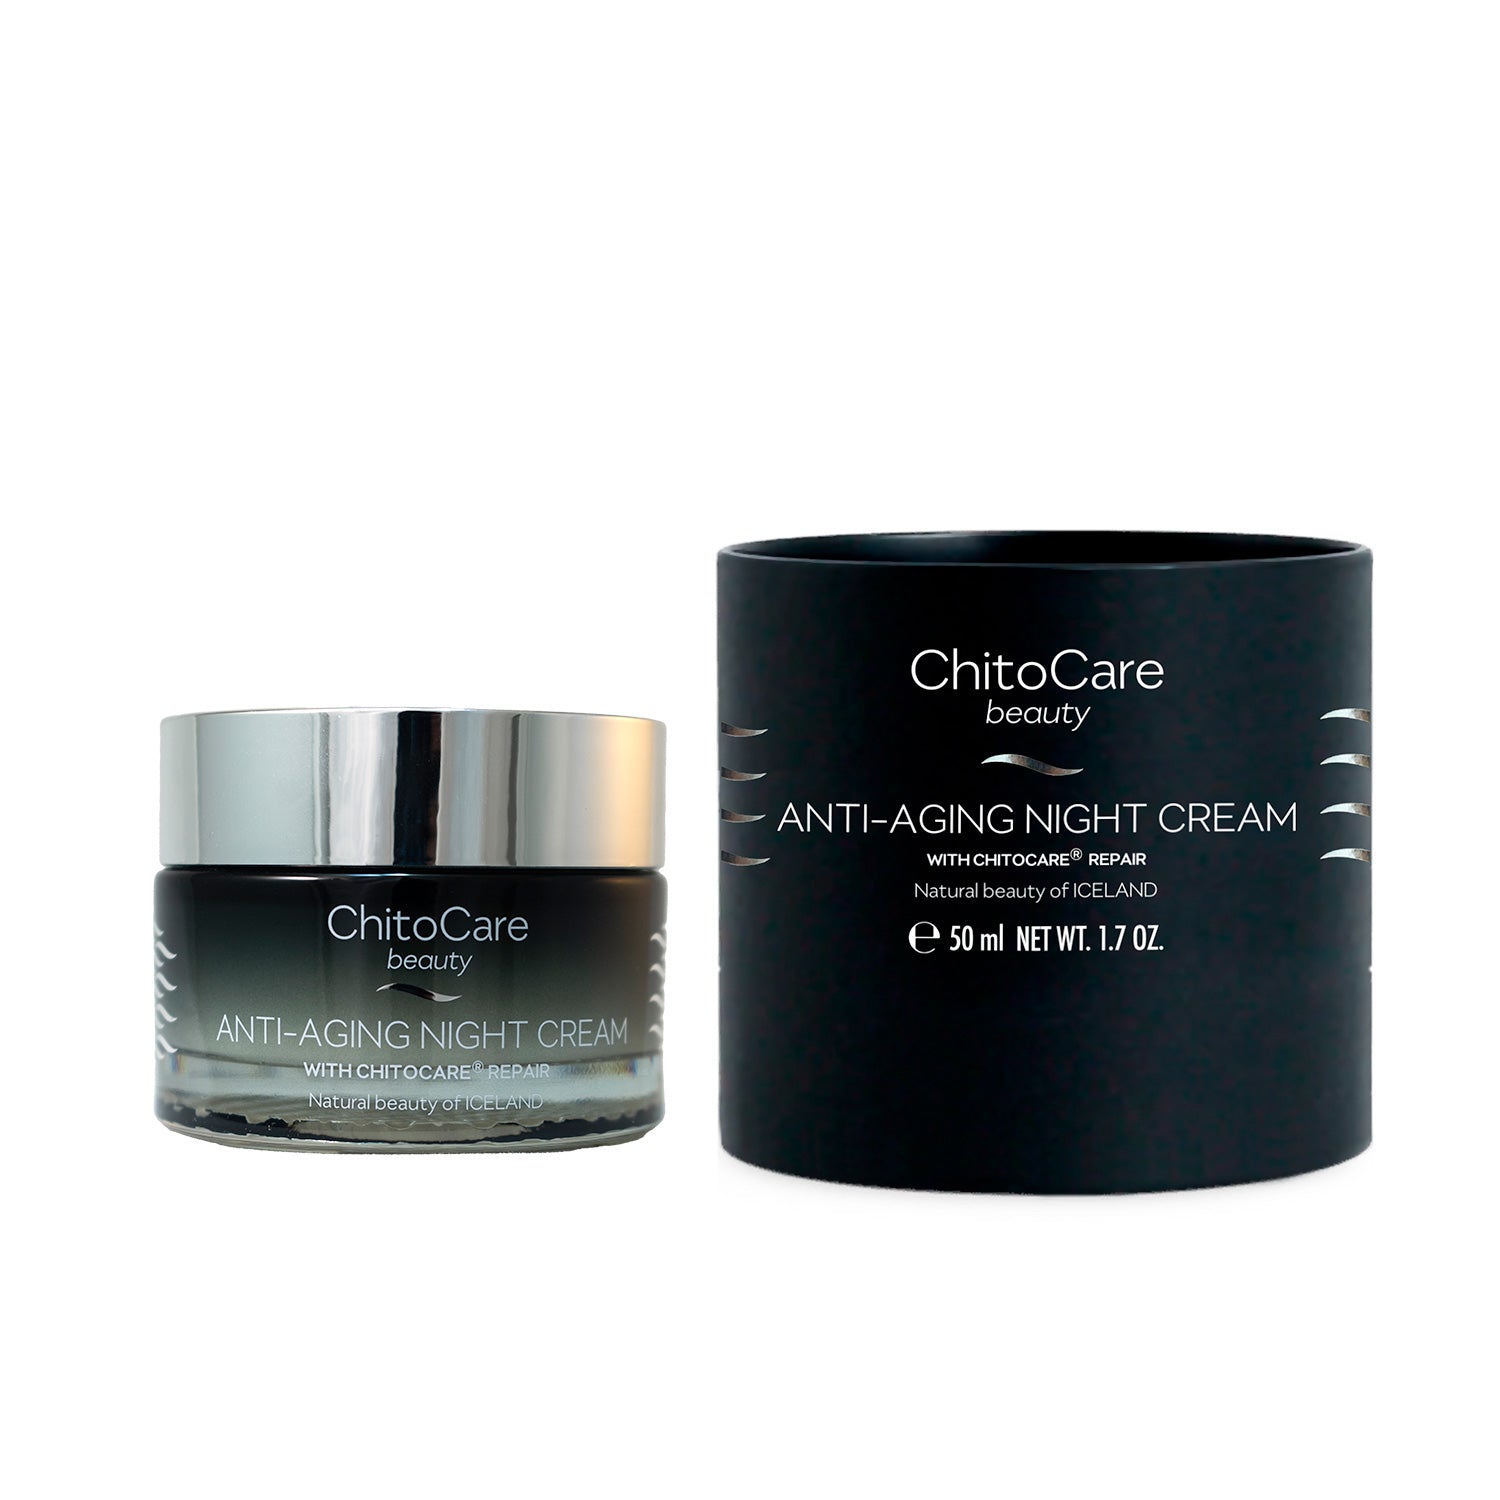 ChitoCare Beauty Anti-Aging Night Cream